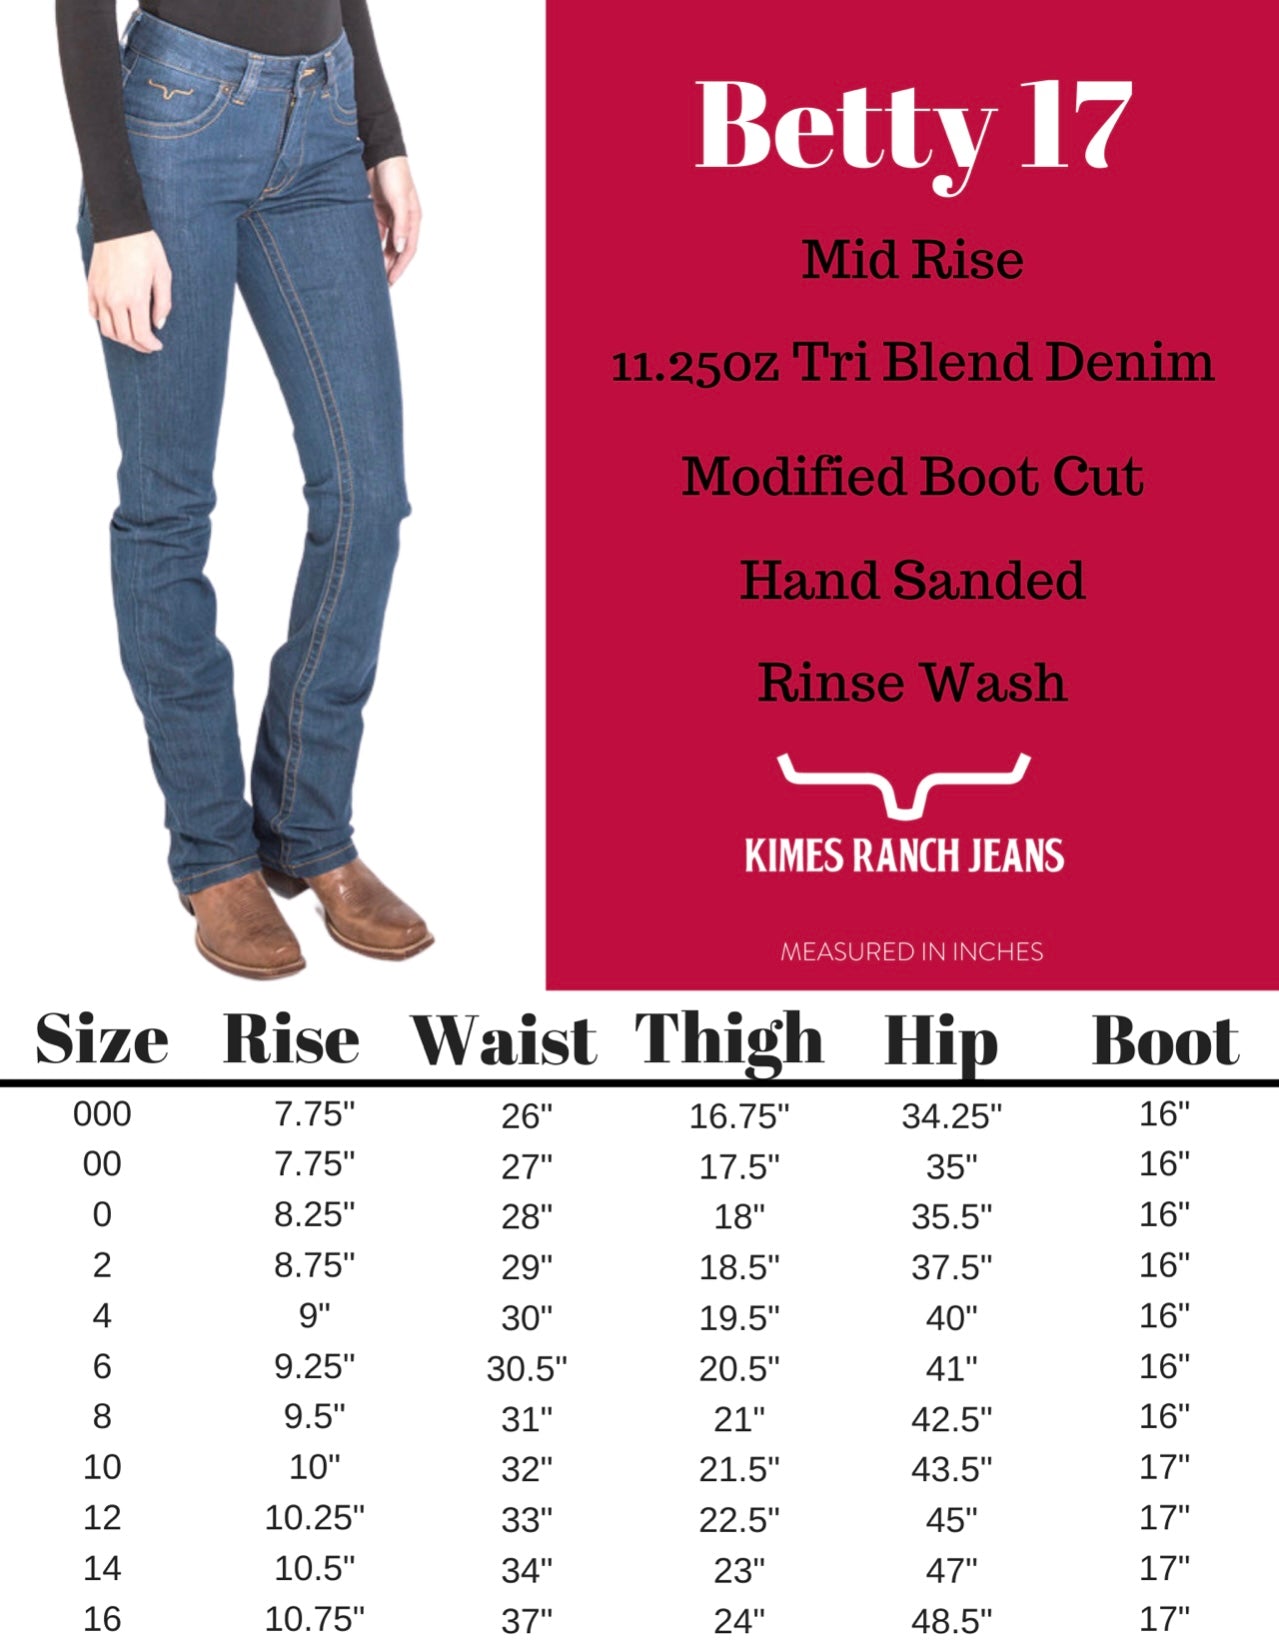 Kimes Ranch Betty 17 Jeans size chart